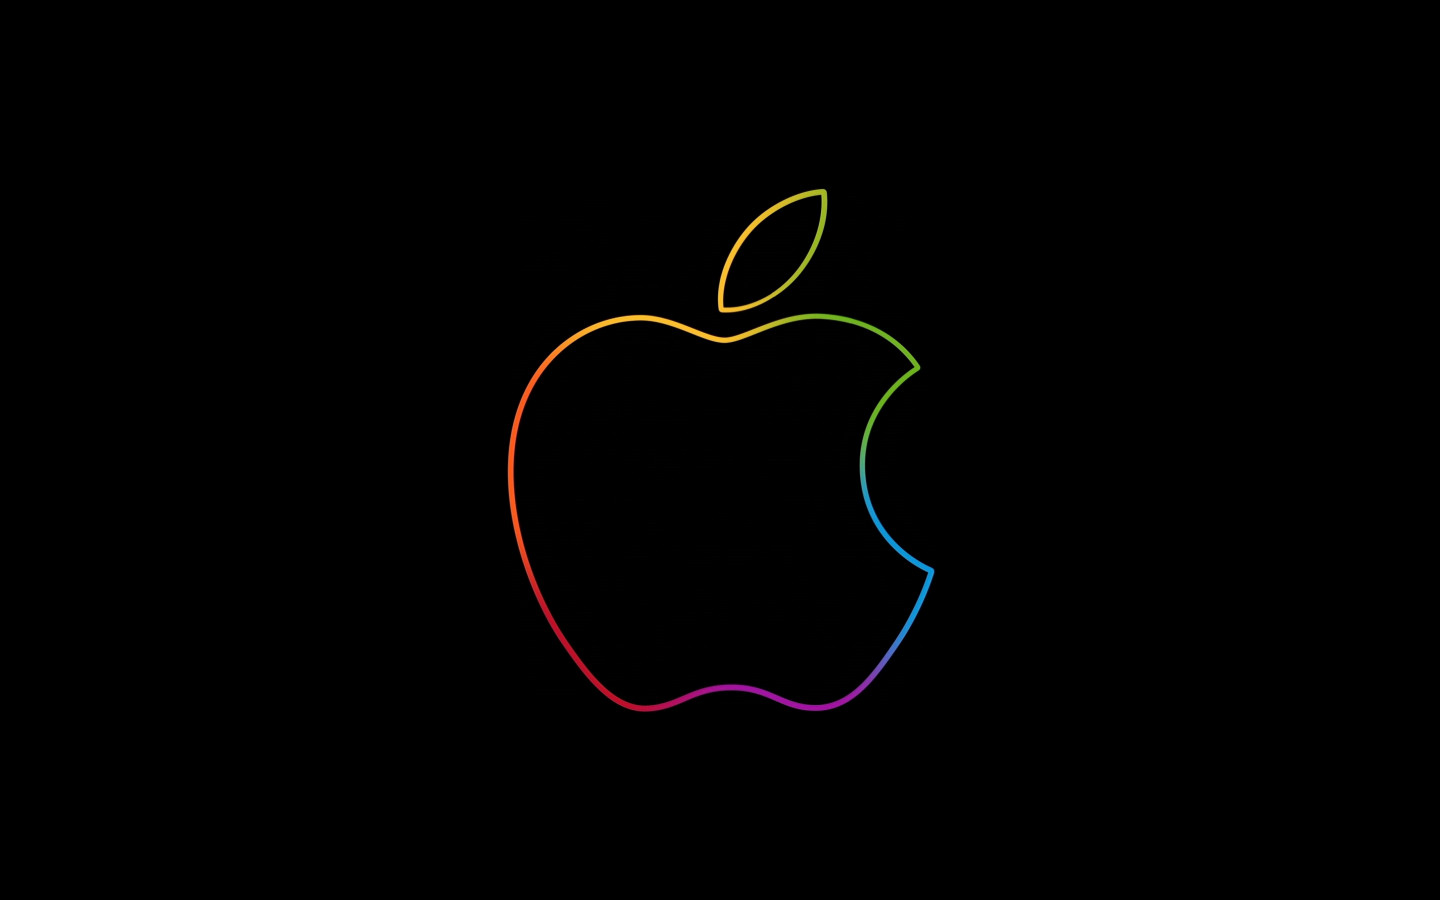 The famous Apple logo wallpaper 1440x900